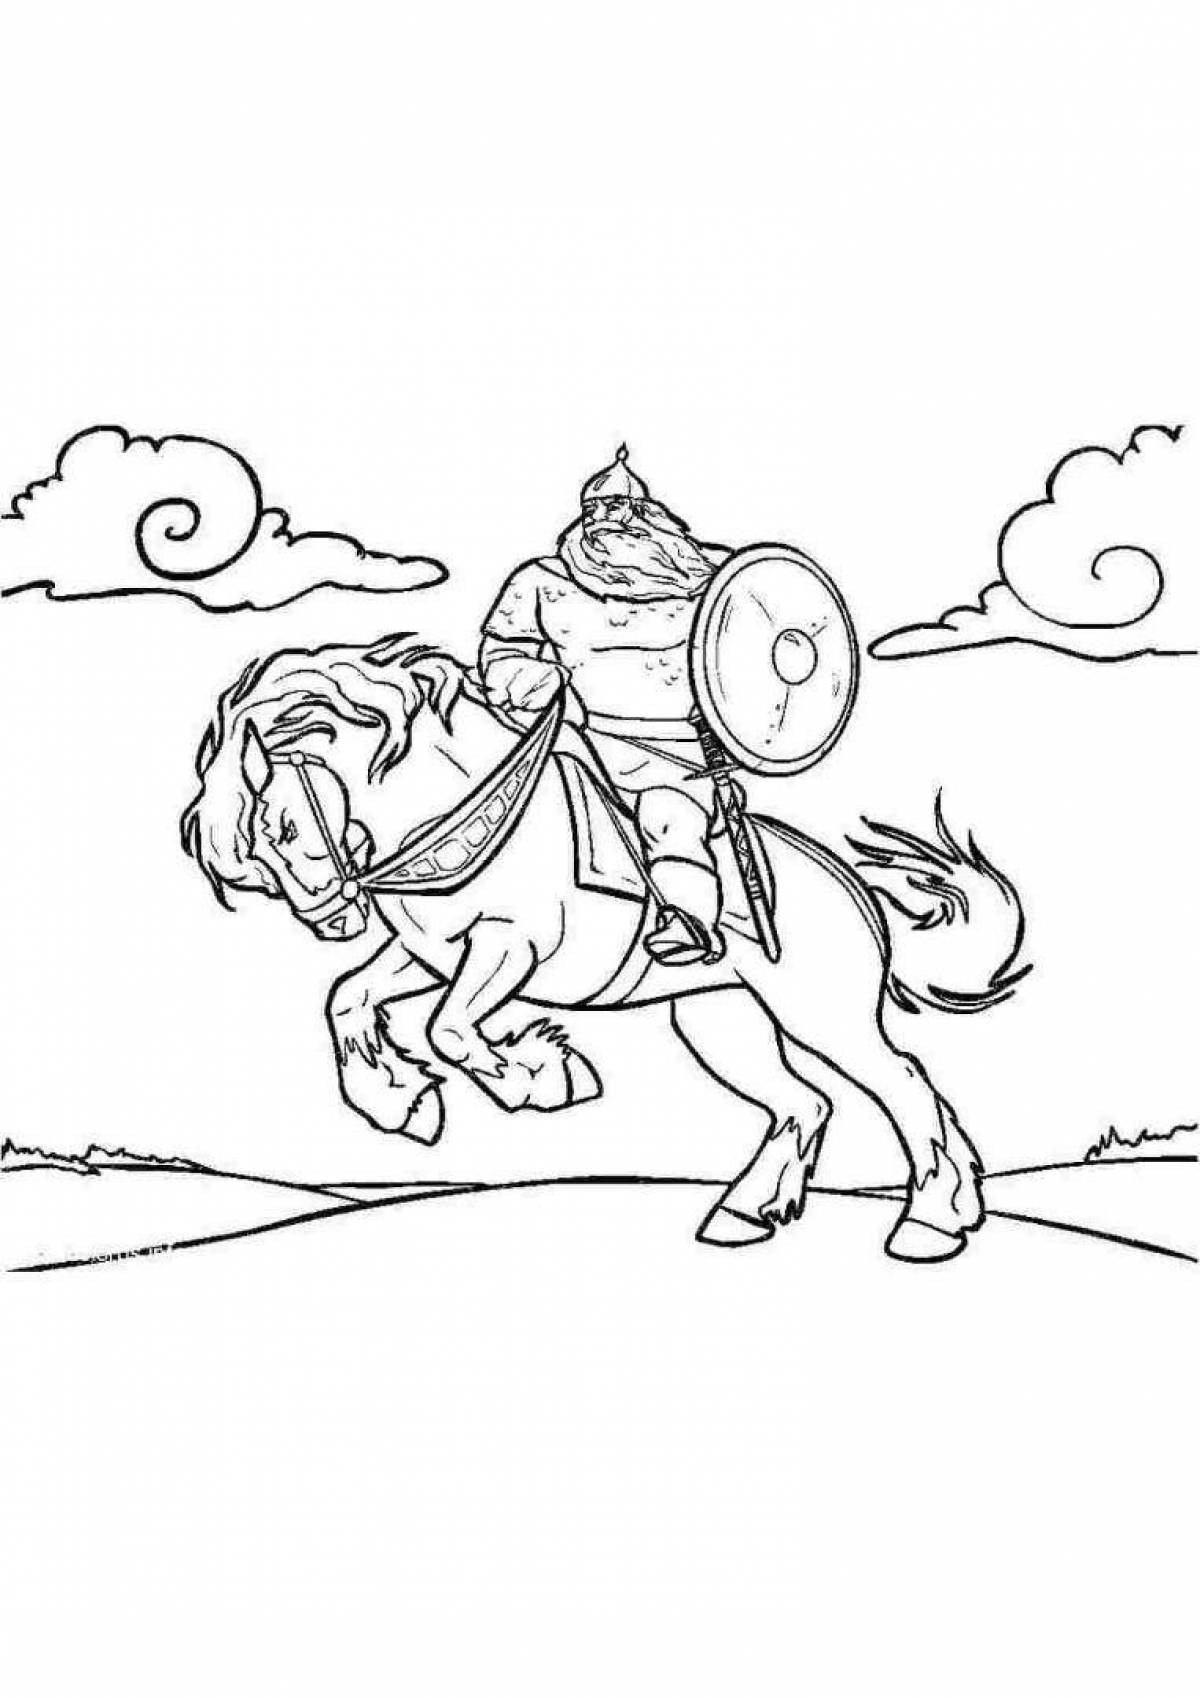 Glorious hero coloring on horseback